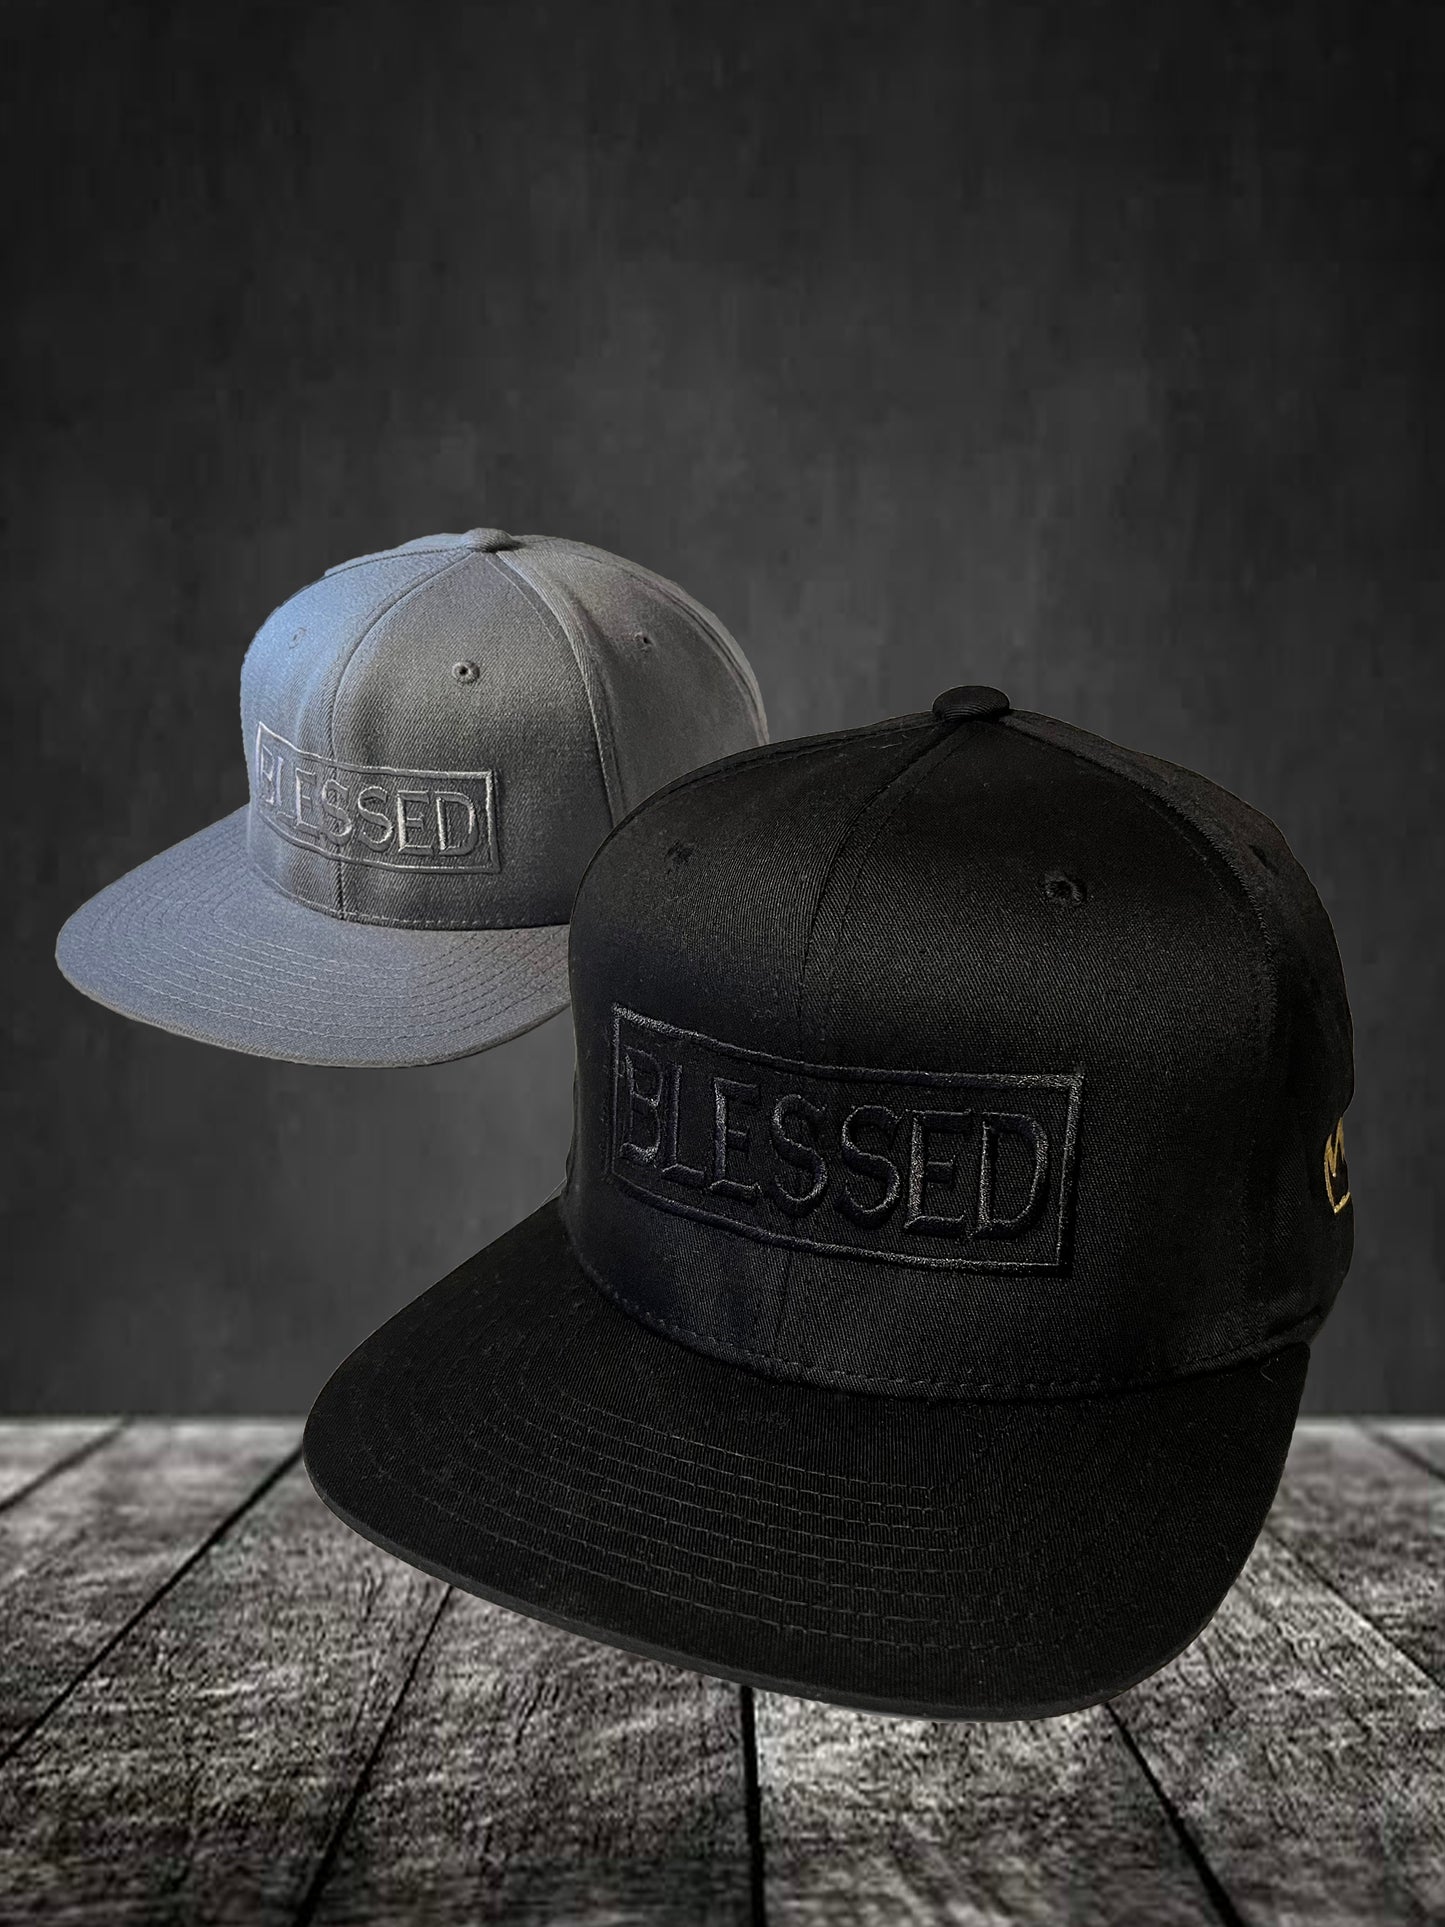 Blessed Black Hat